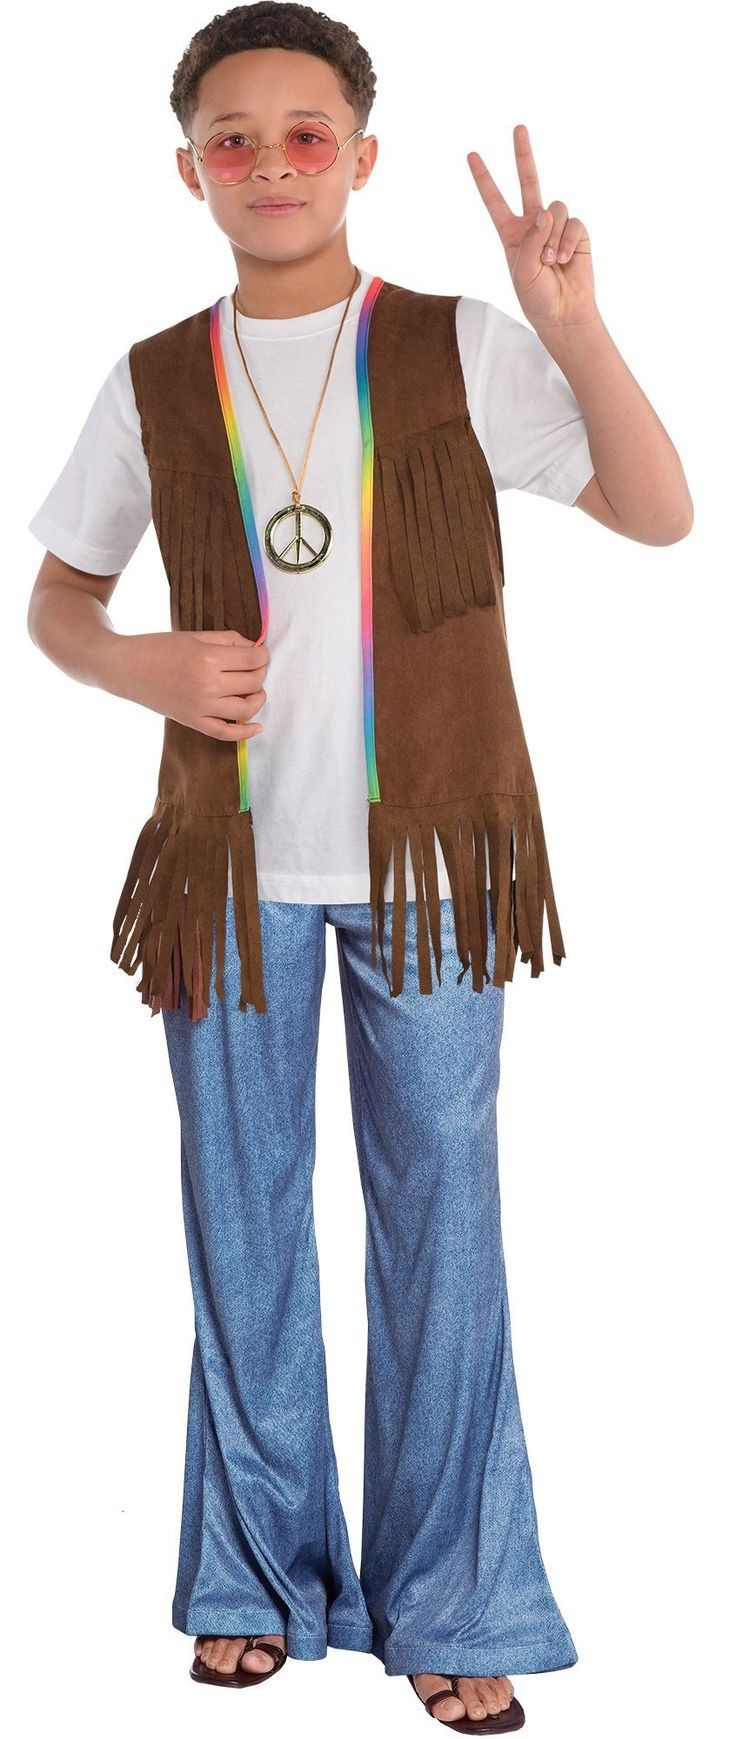 Hippie Halloween Costume DIY
 Best 25 Hippie costume ideas on Pinterest